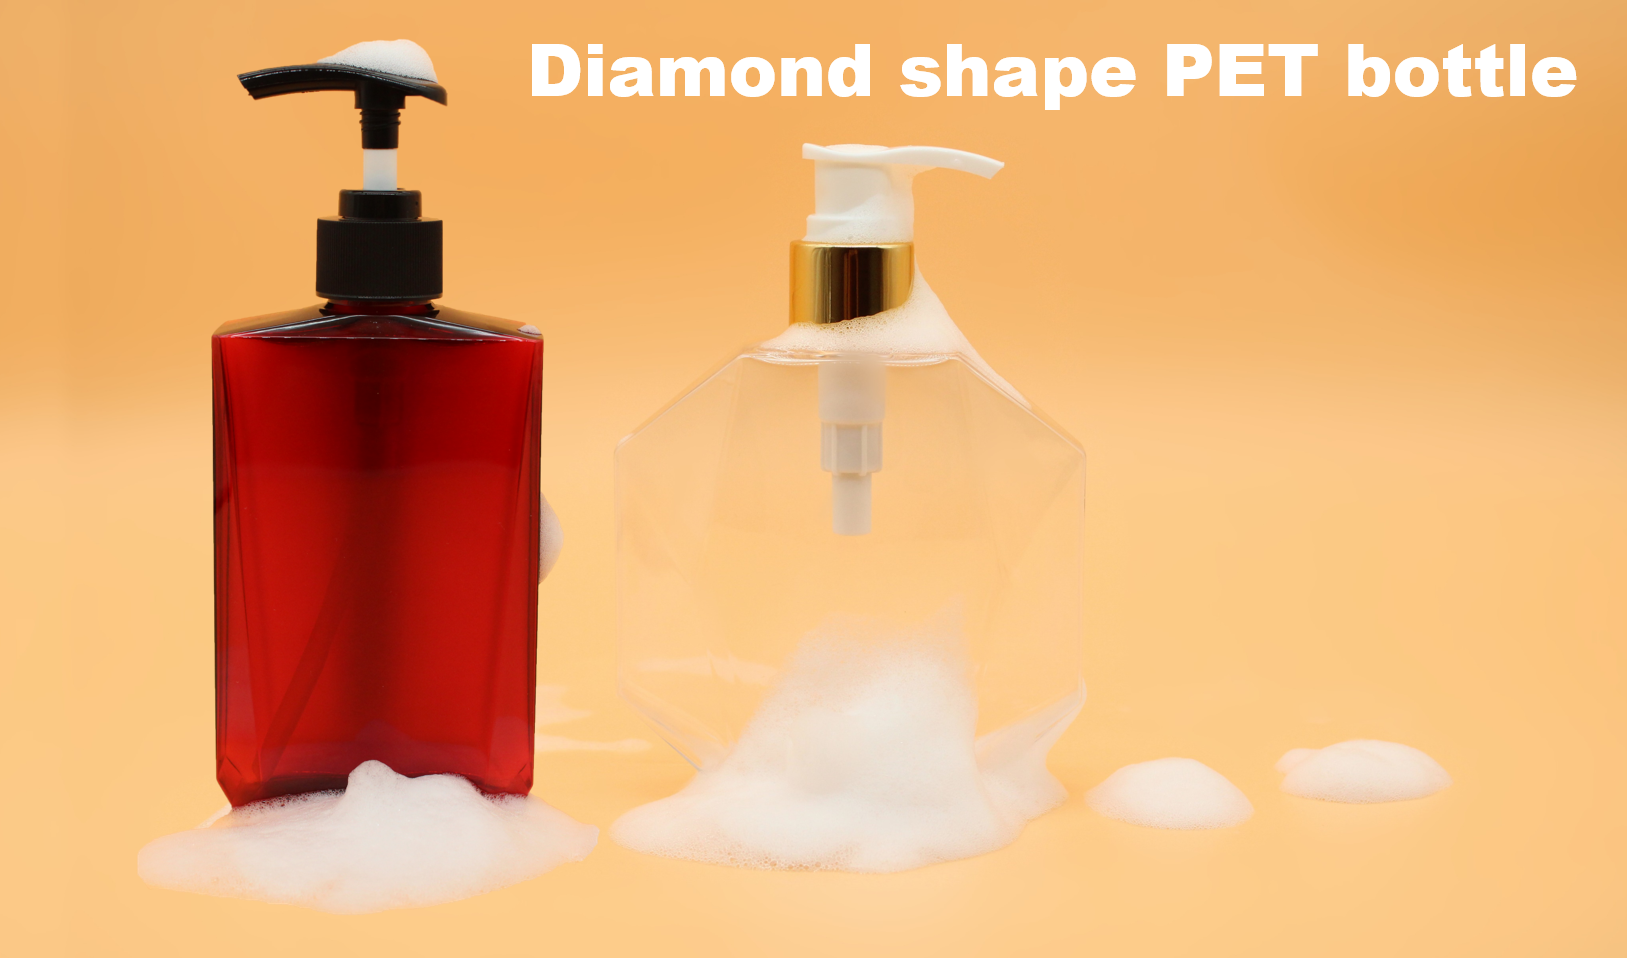 Diamond shape PET bottle}